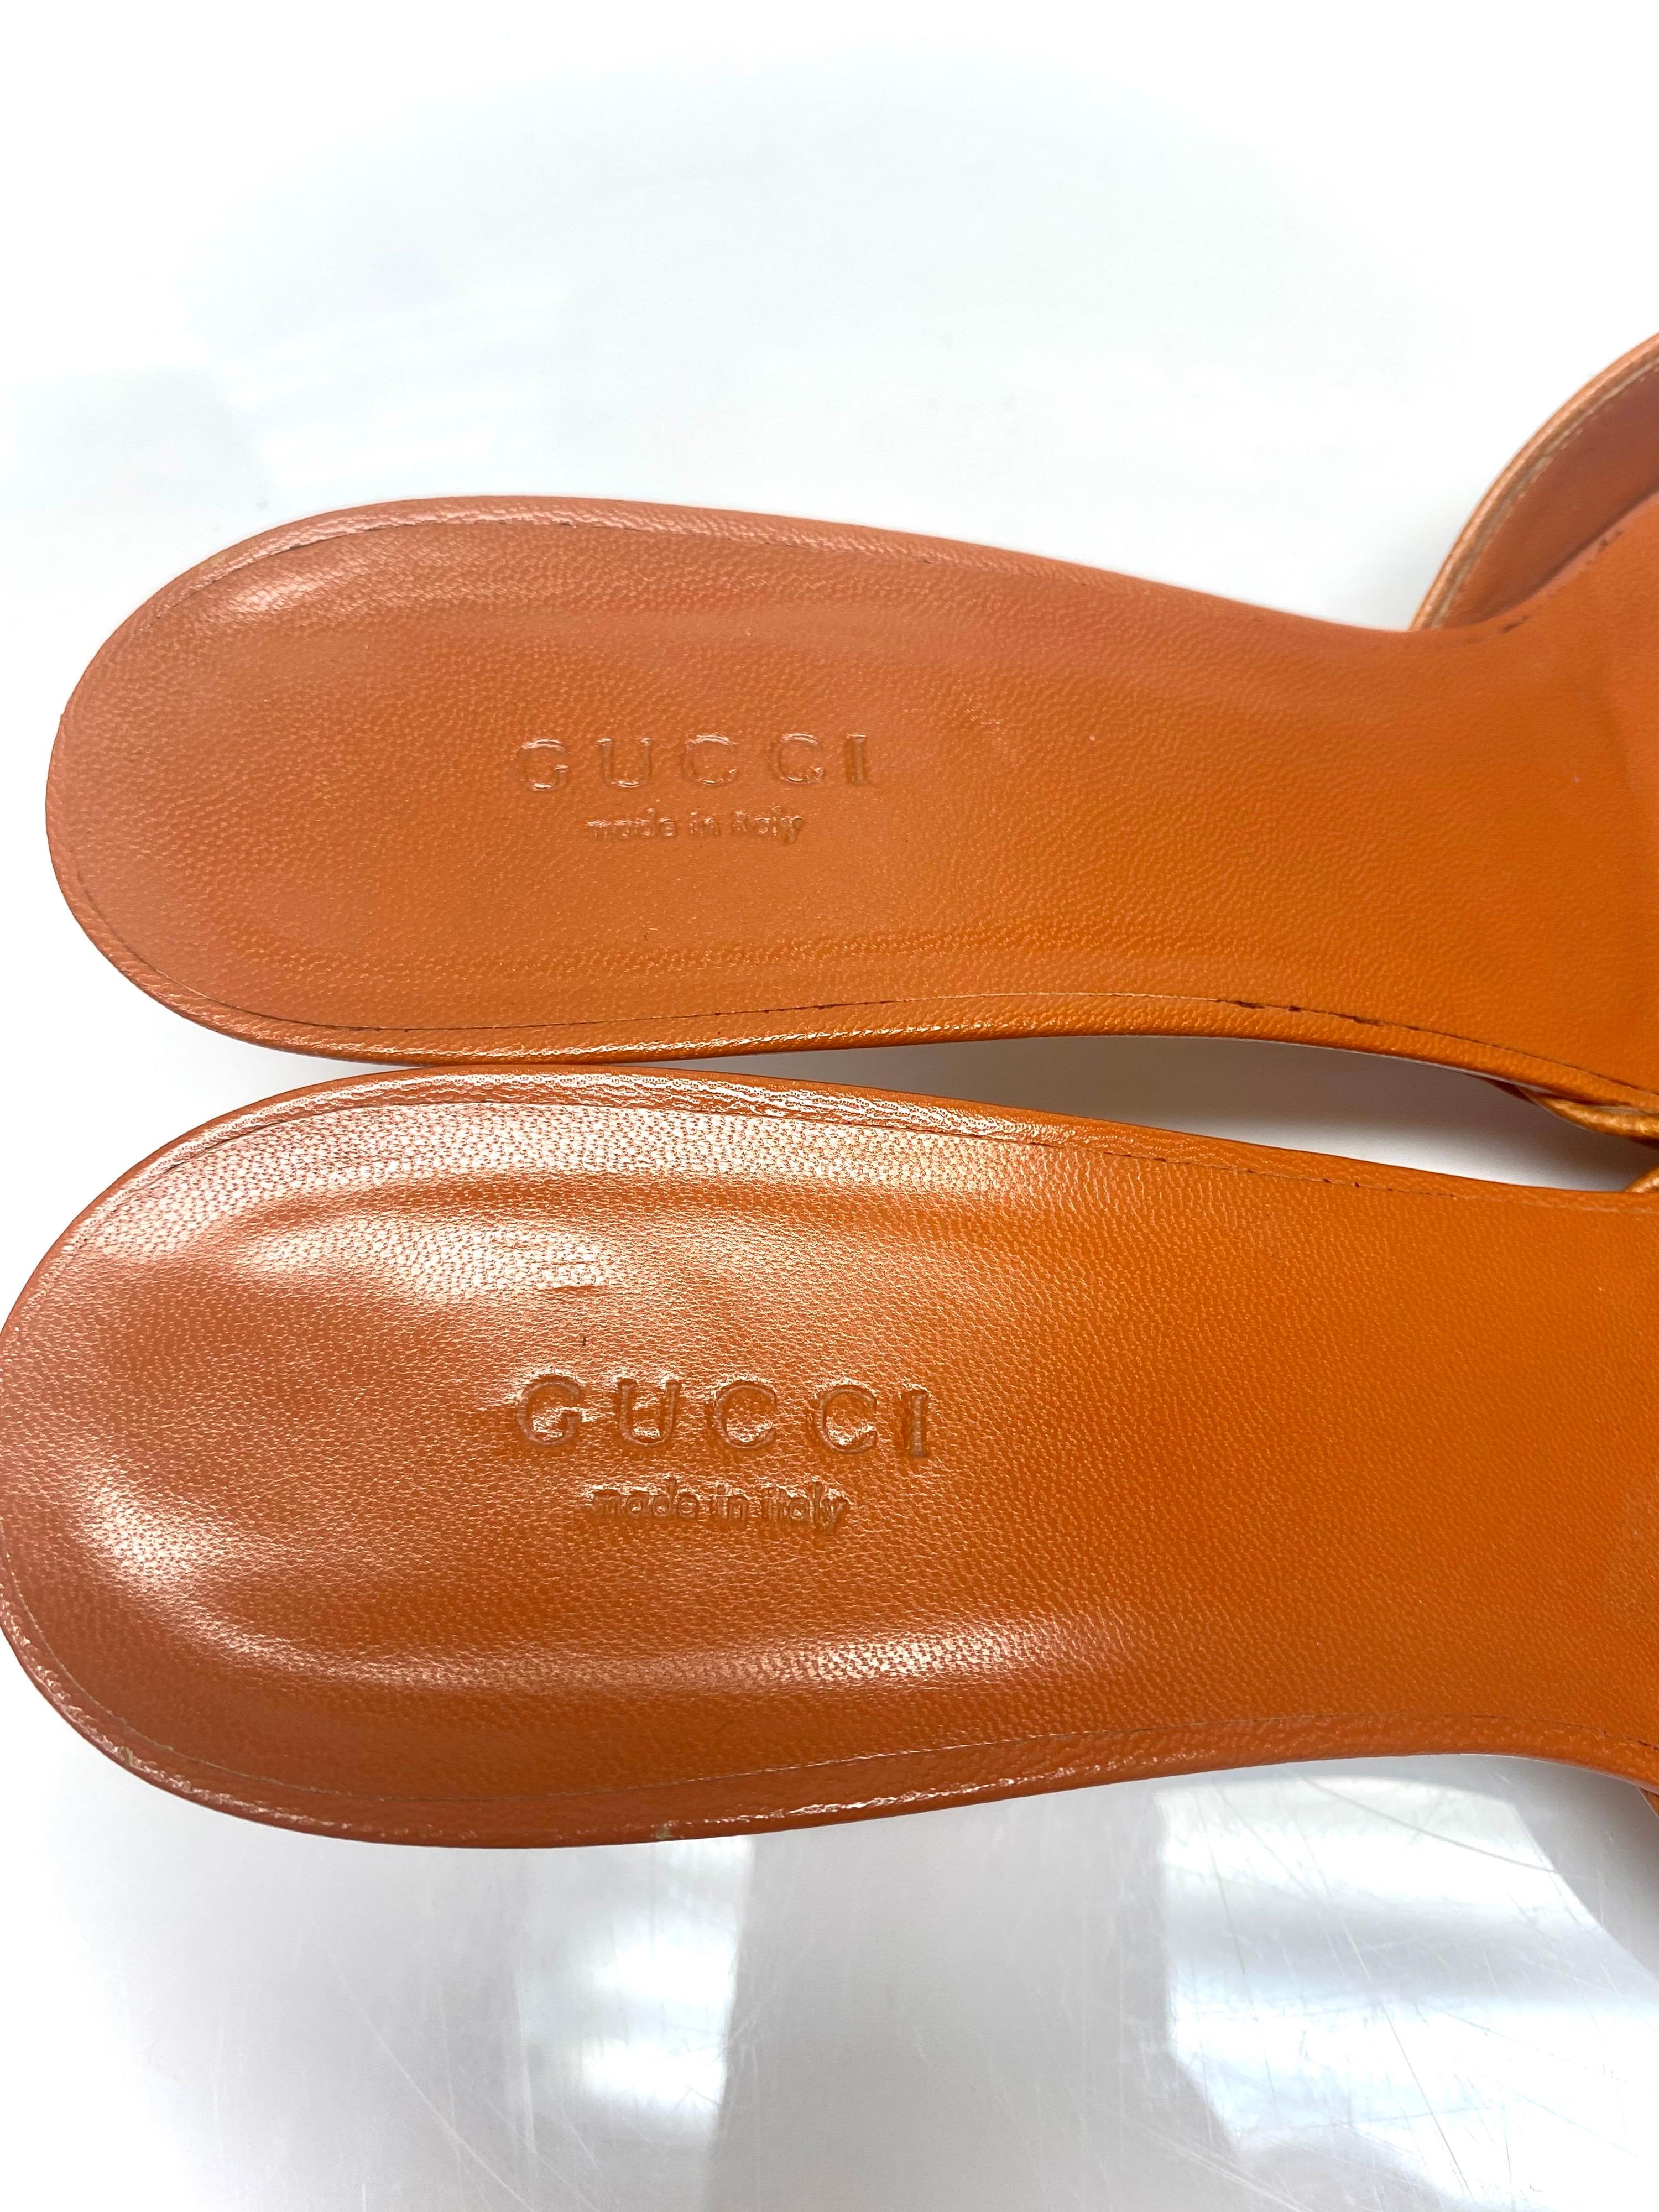 Gucci Logo w/ Silver Detail & Orange Leather Trim Slide Size 38.5 3